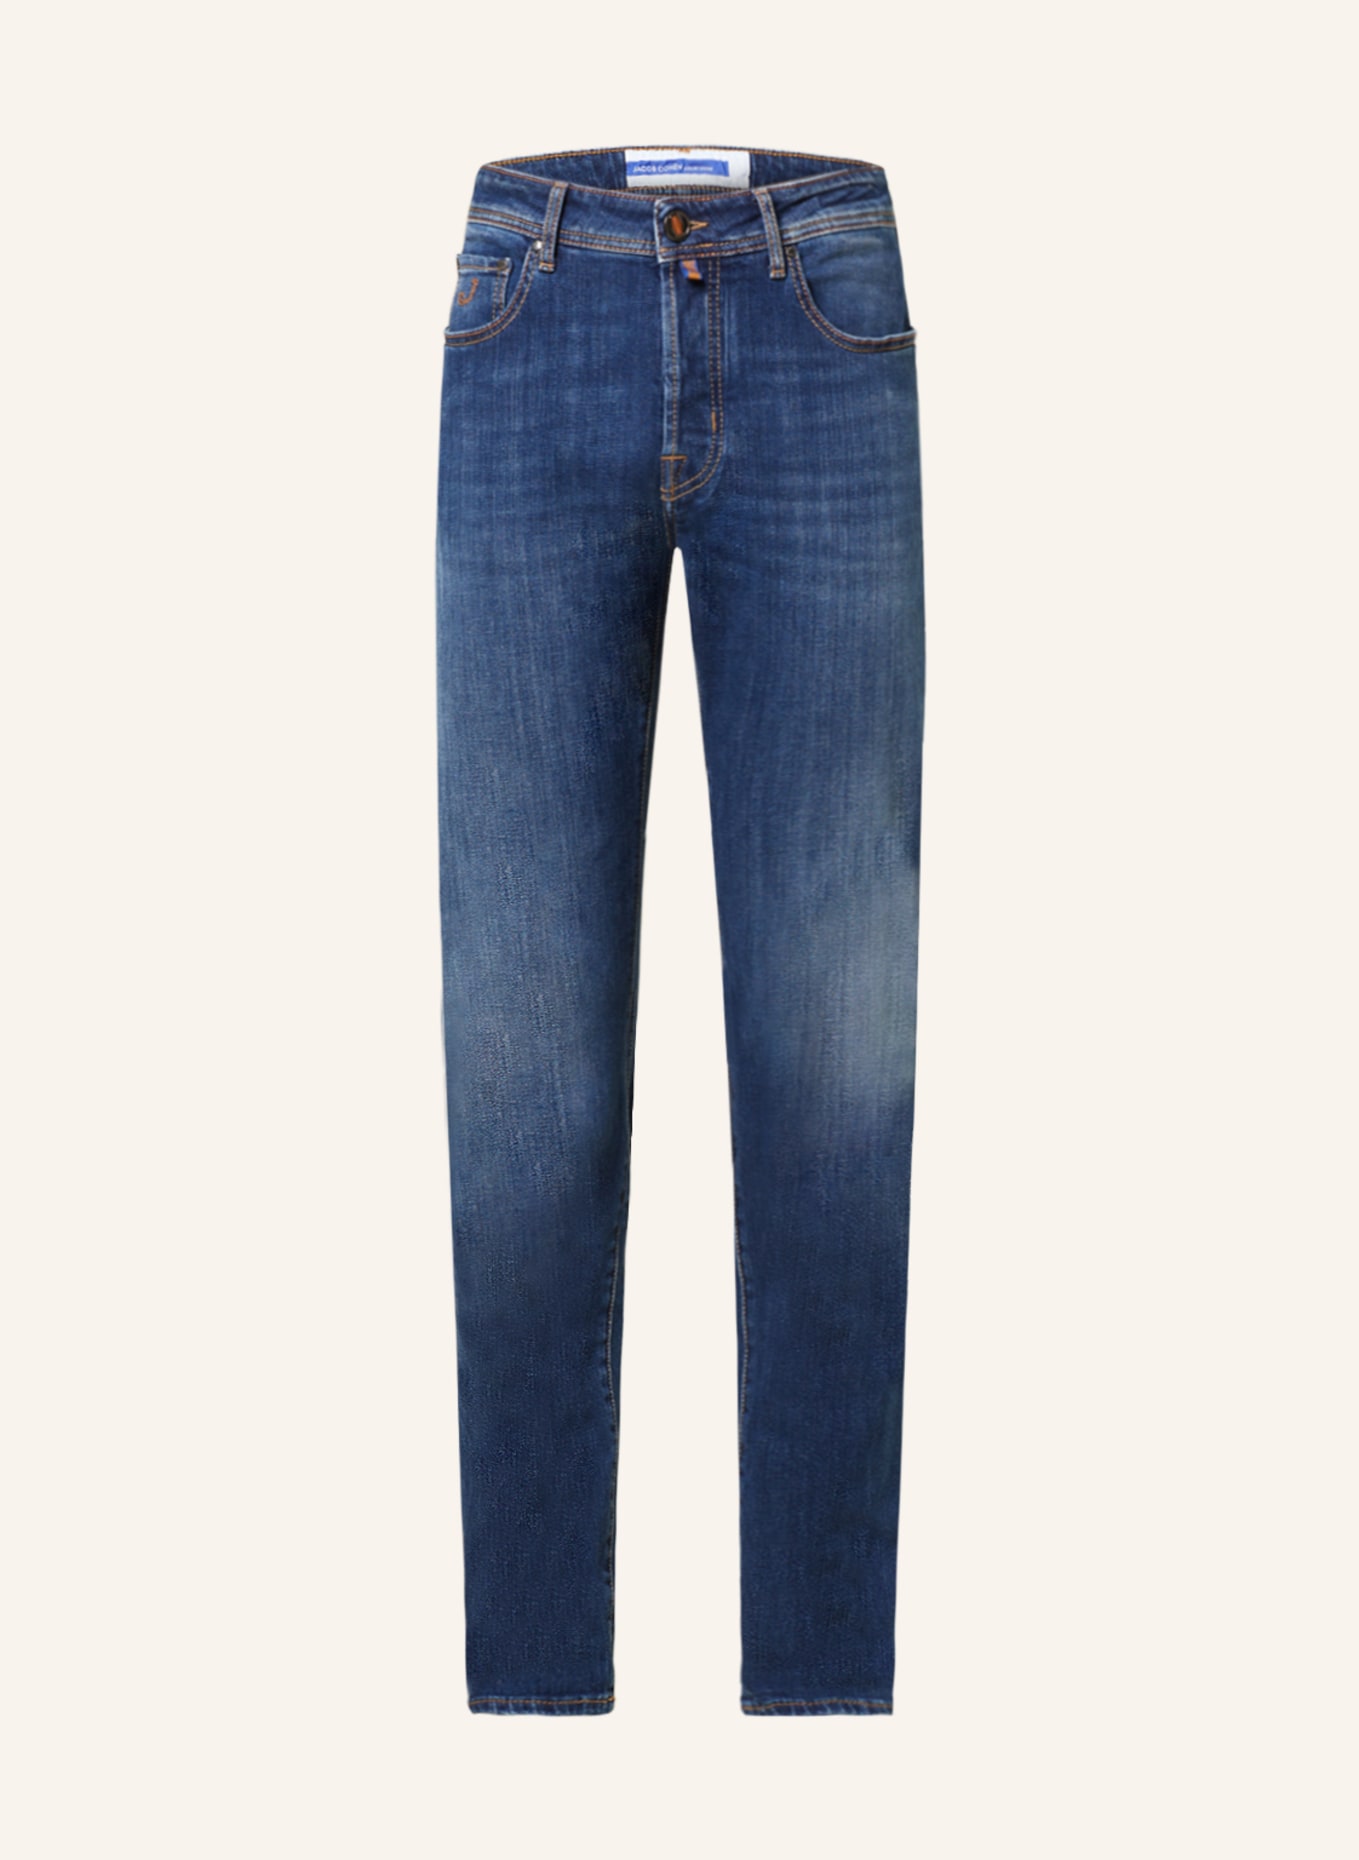 JACOB COHEN Jeans BARD Slim Fit, Farbe: 597D Mid Blue (Bild 1)